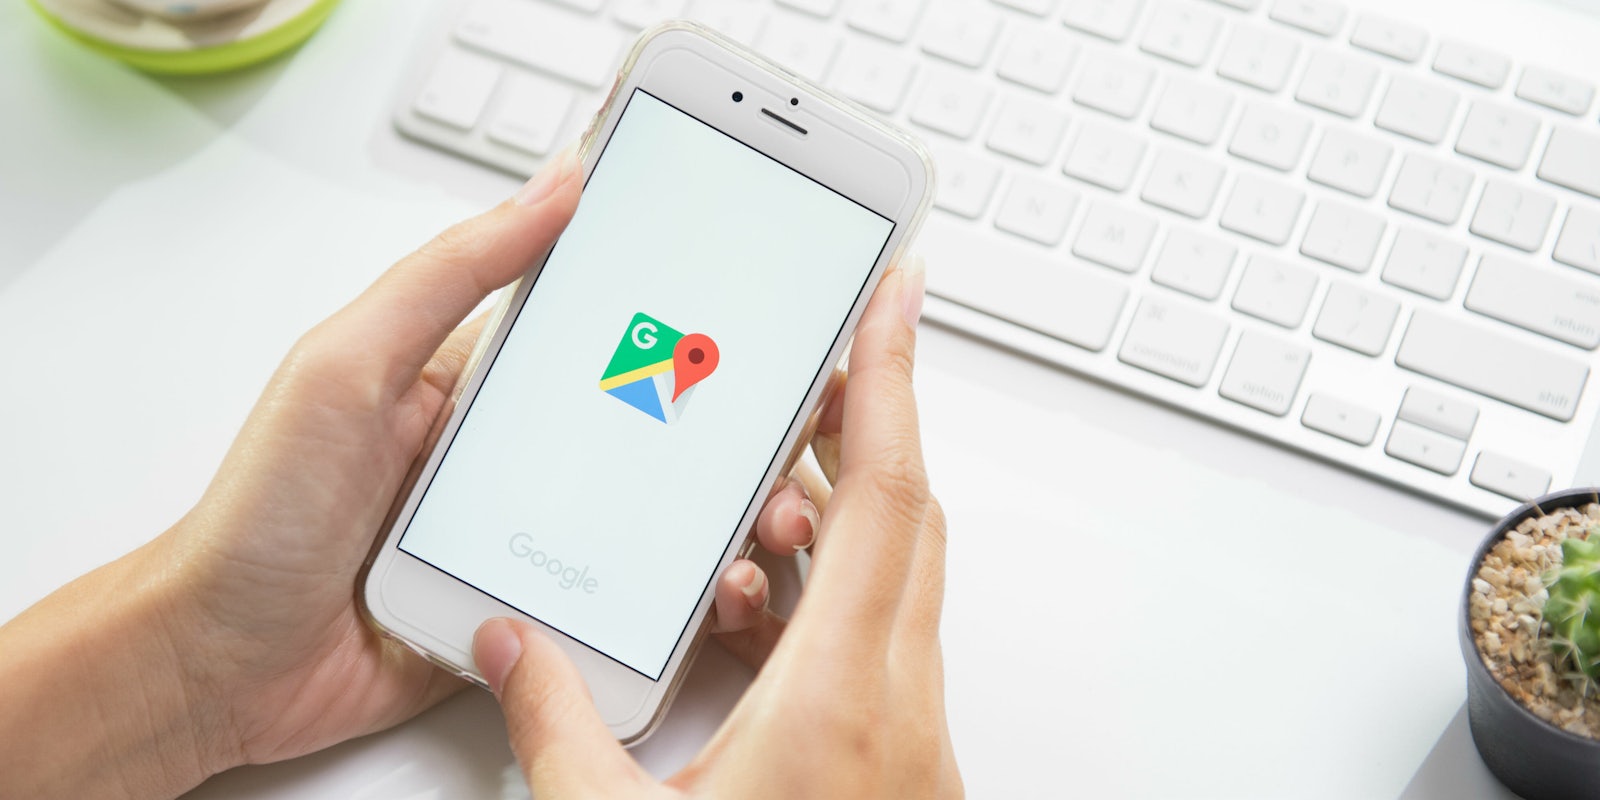 google maps app smartphone